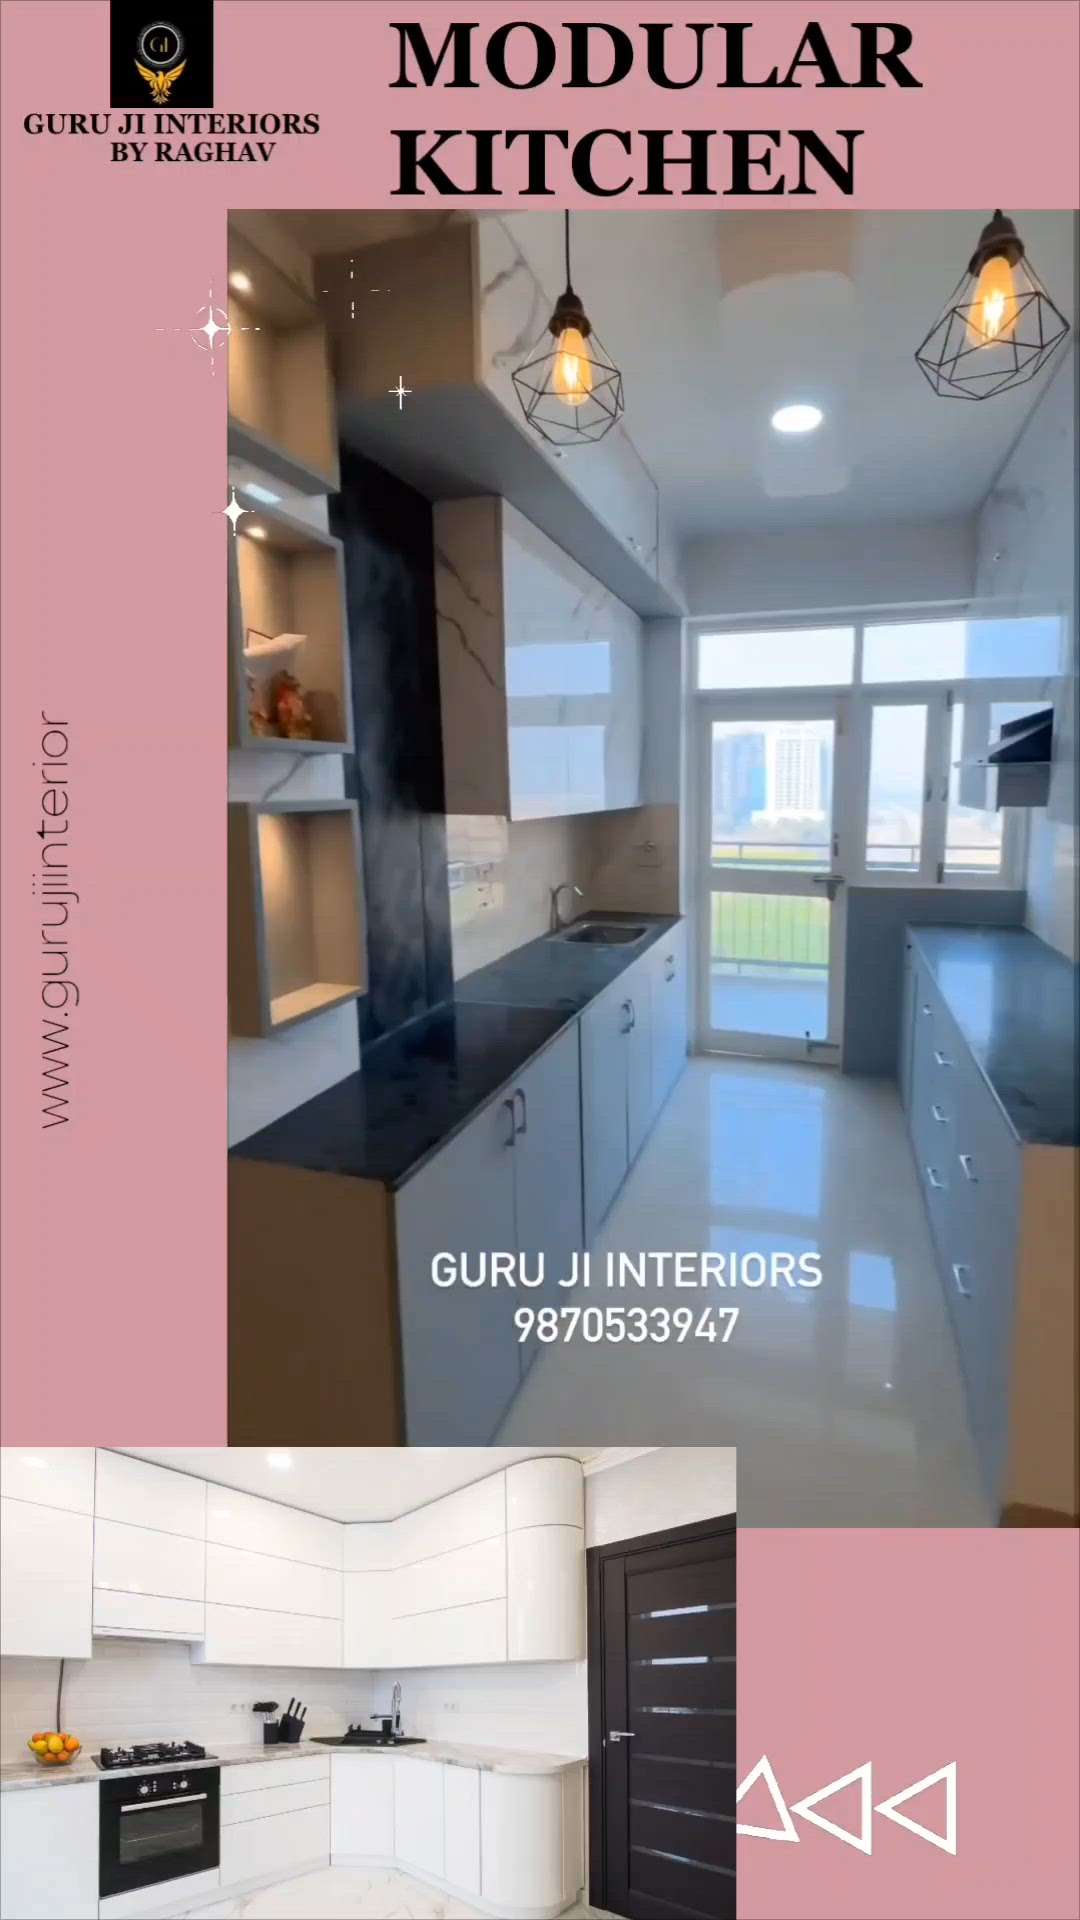 MODULAR KITCHEN DESIGN ✨
Like this design ? 
Follow for more
# Get Lowest price &  best quality home interiors 💫
.
Guru ji interiors
By Raghav
Call - 9870533947
#luxuryhomes 
#modernkitchen 
#HomeDecore #interiordesign